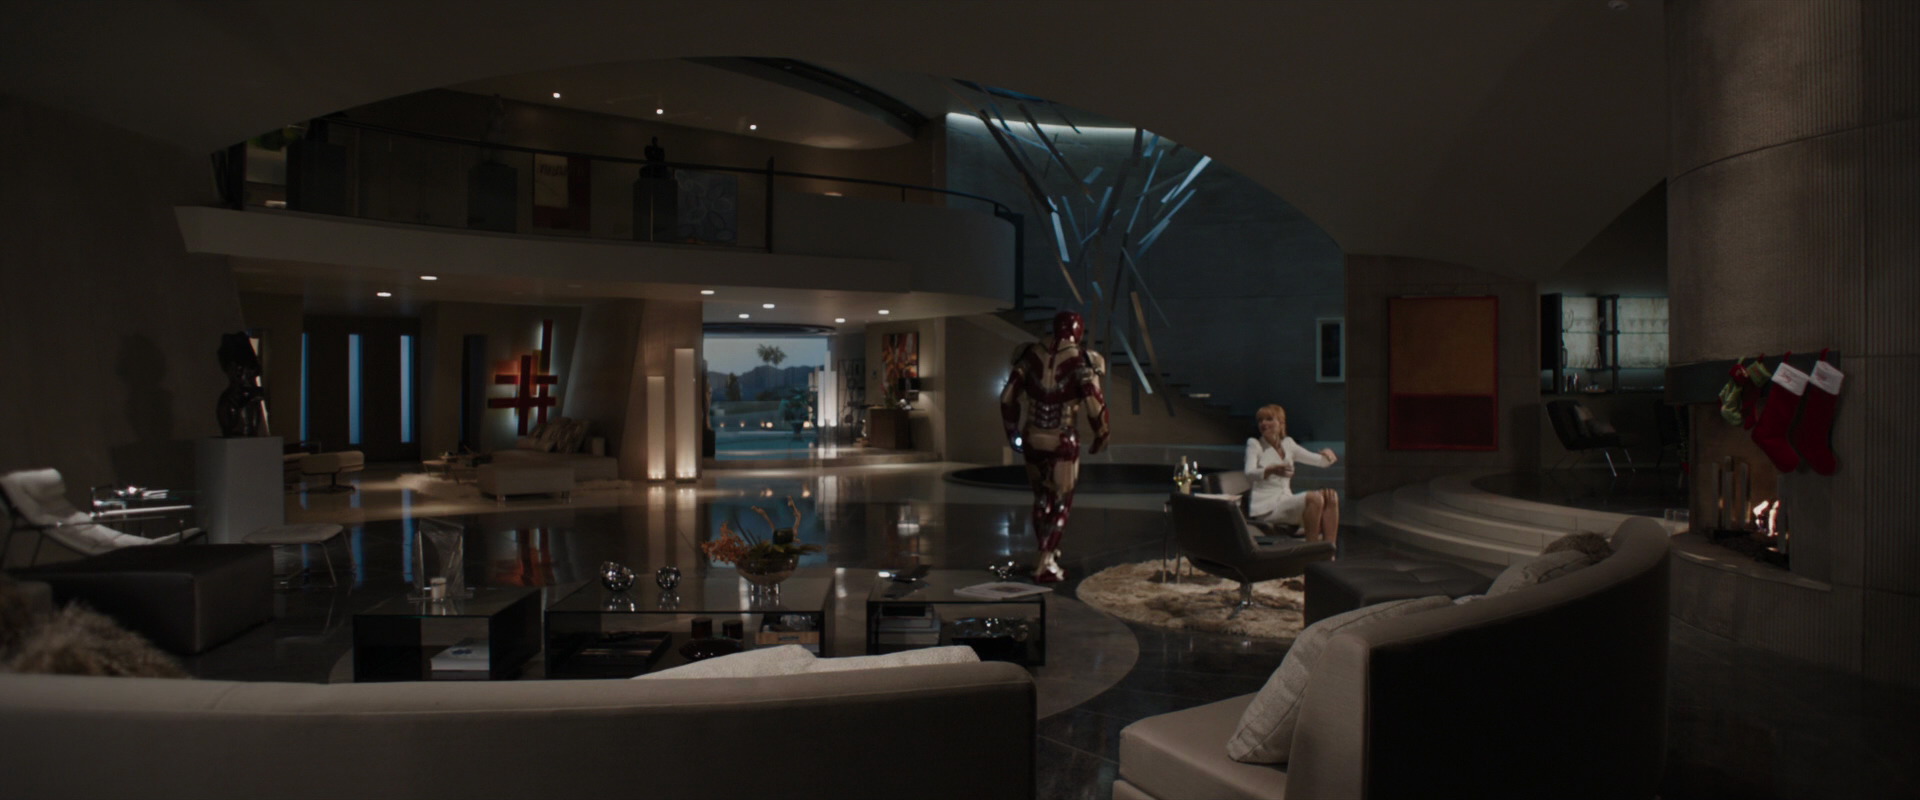 Image - Iron-man3-movie-screencaps com-2249.jpg | Marvel Cinematic ...